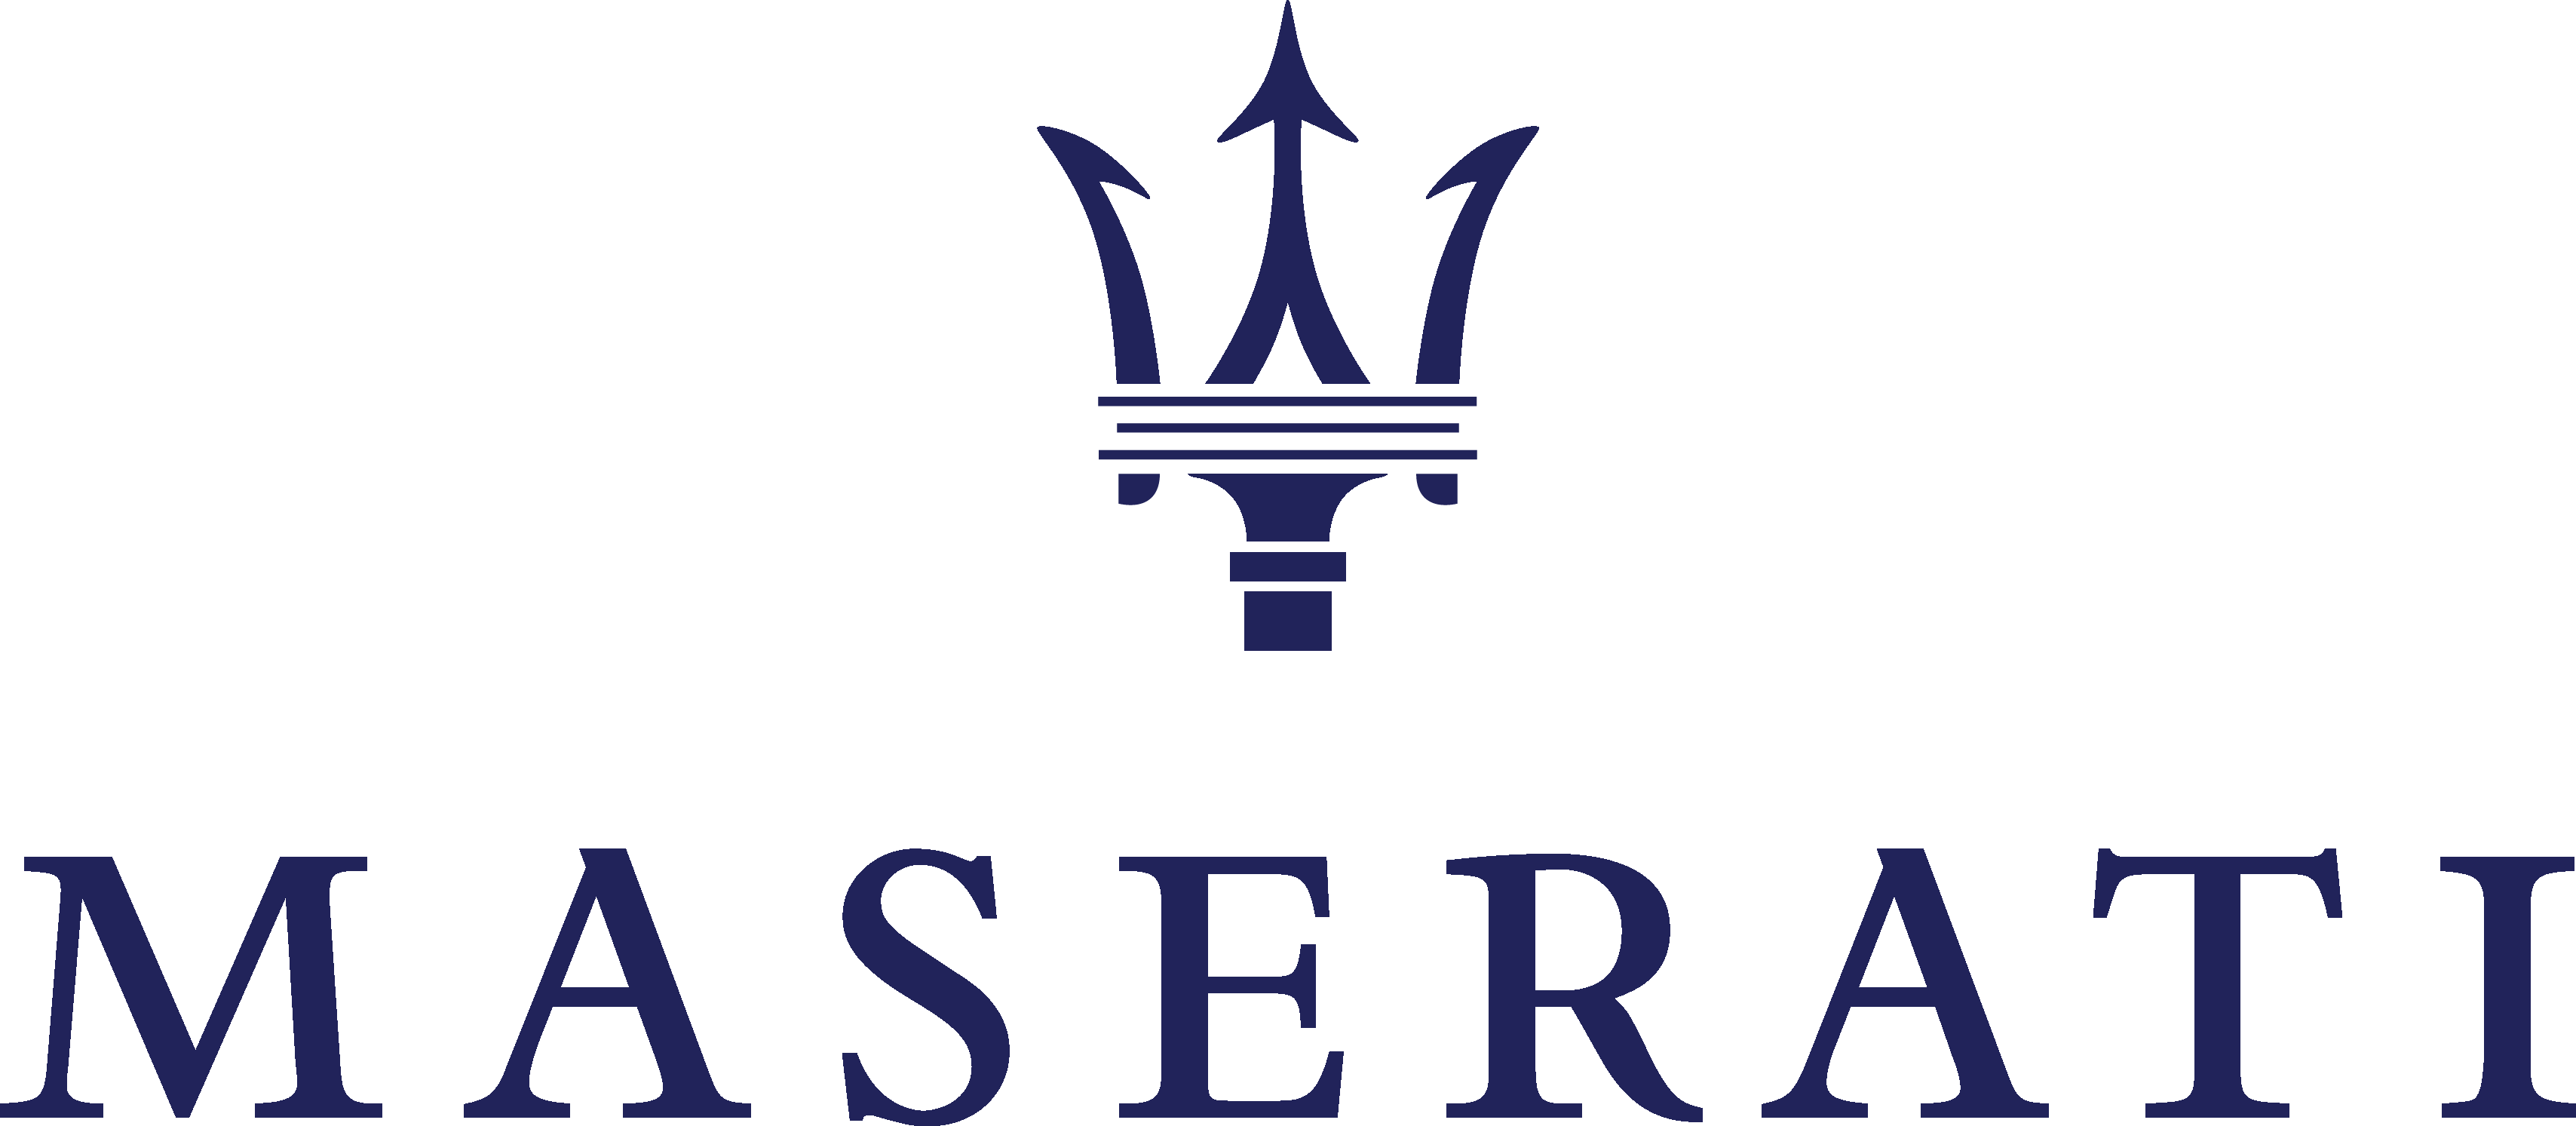 Granturismo Maserati Car Cars Brands Logo 2017 Clipart